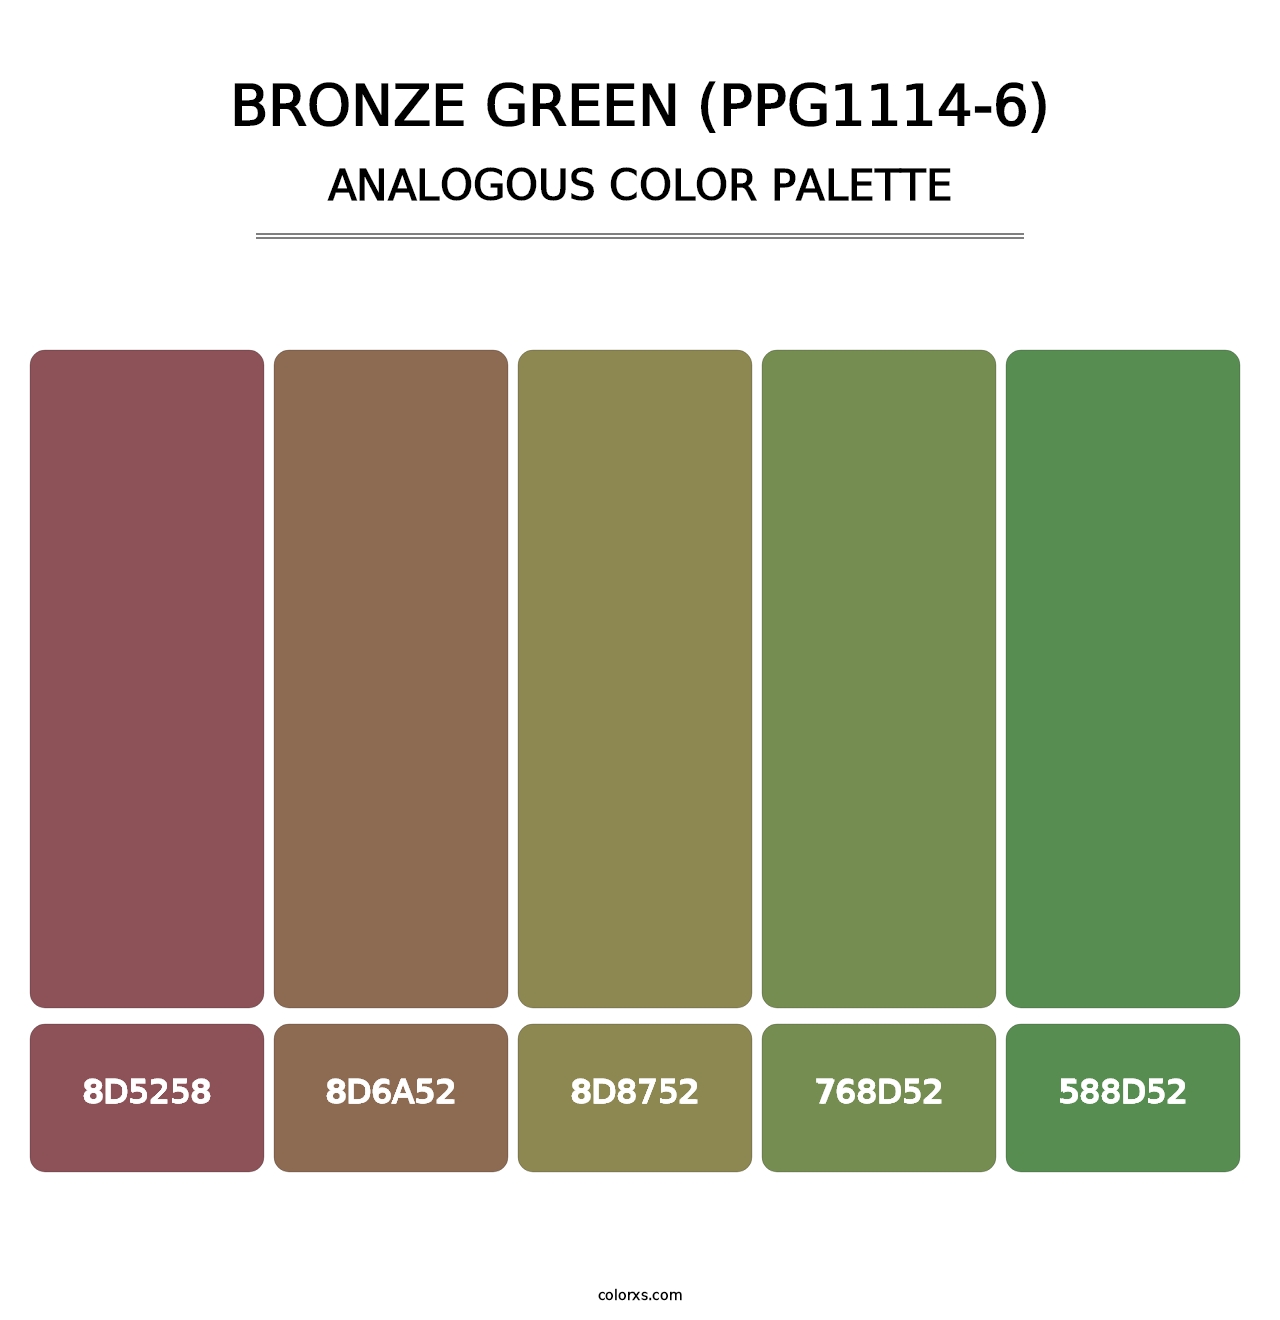 Bronze Green (PPG1114-6) - Analogous Color Palette